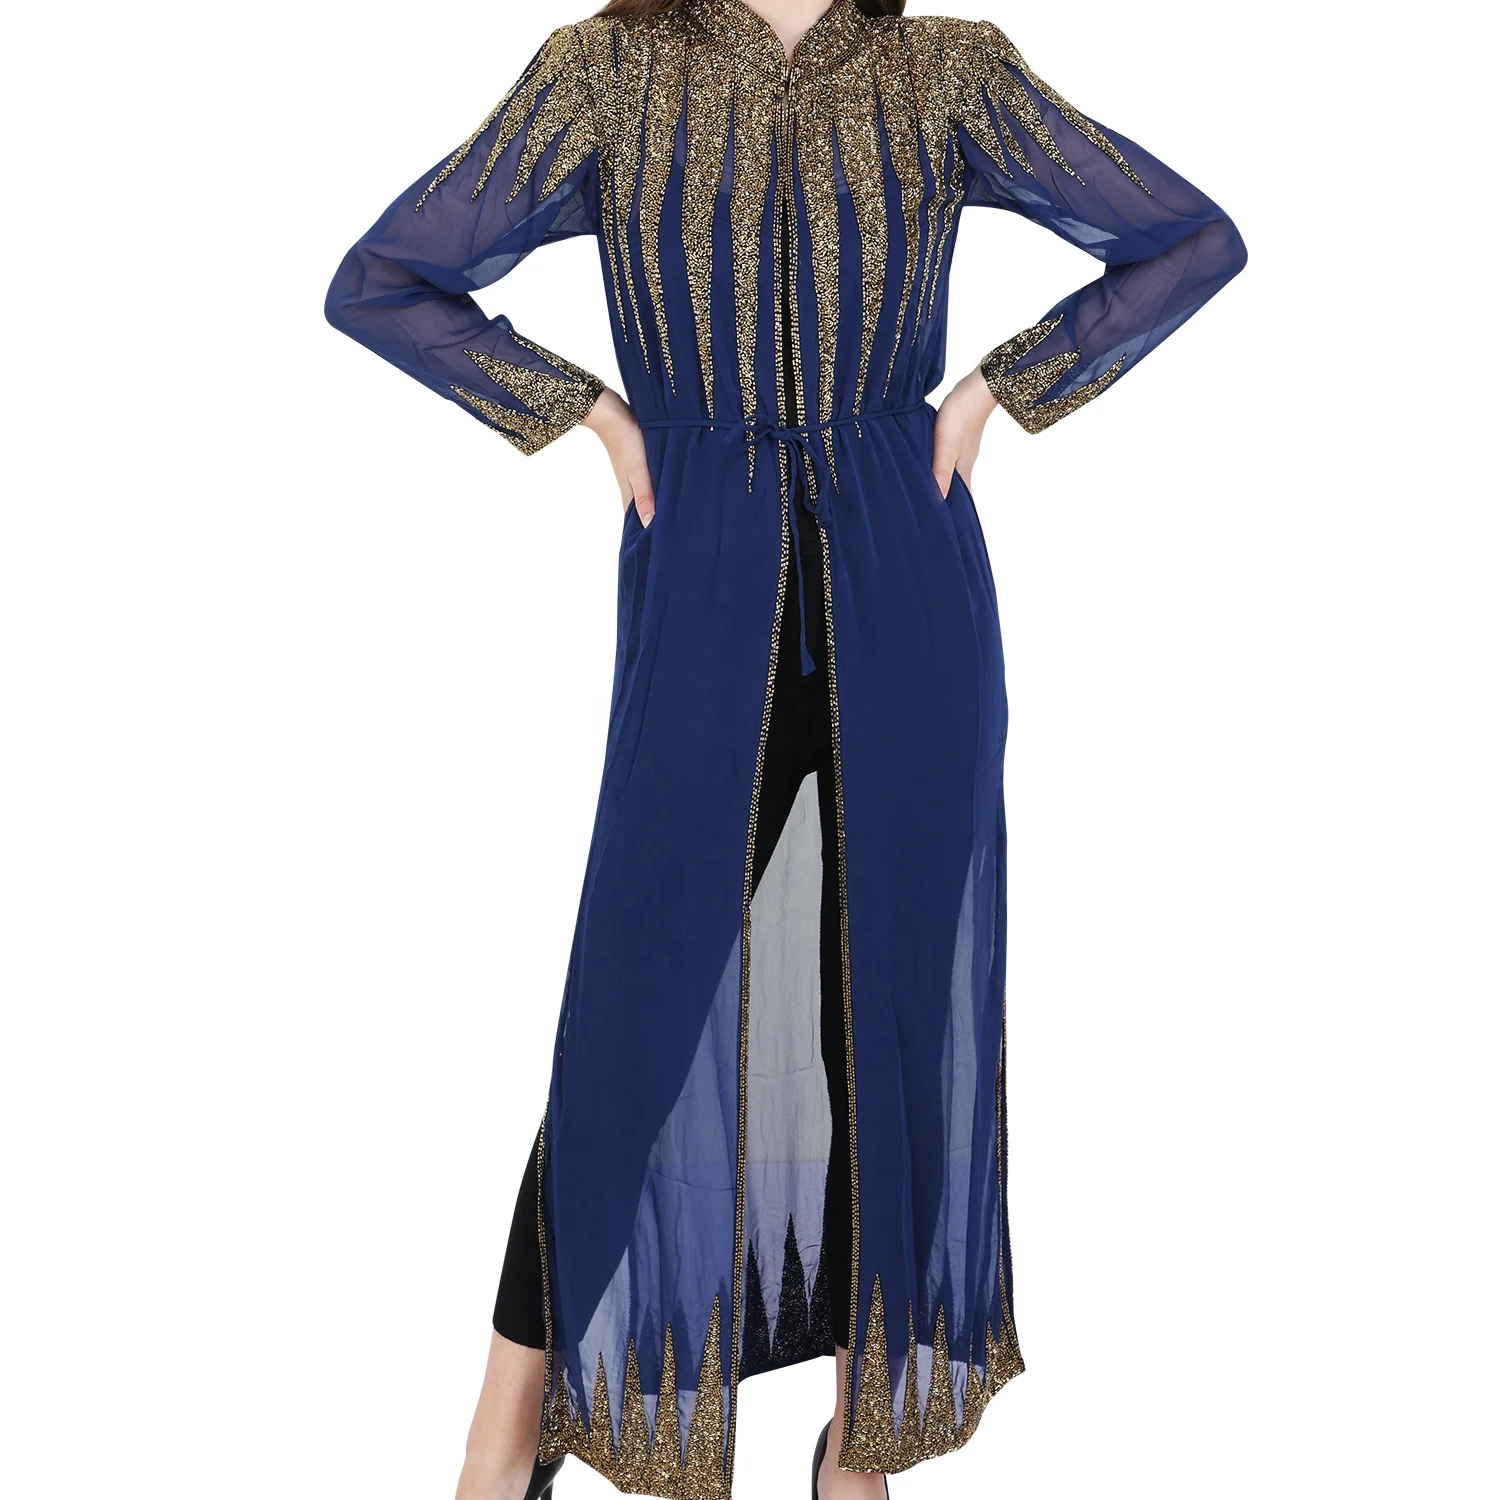 EXCLUSIVE FARASHA FANCY JILBAB ARABIAN FANCY WOMEN DRESS ABAYA DESIGN 6061